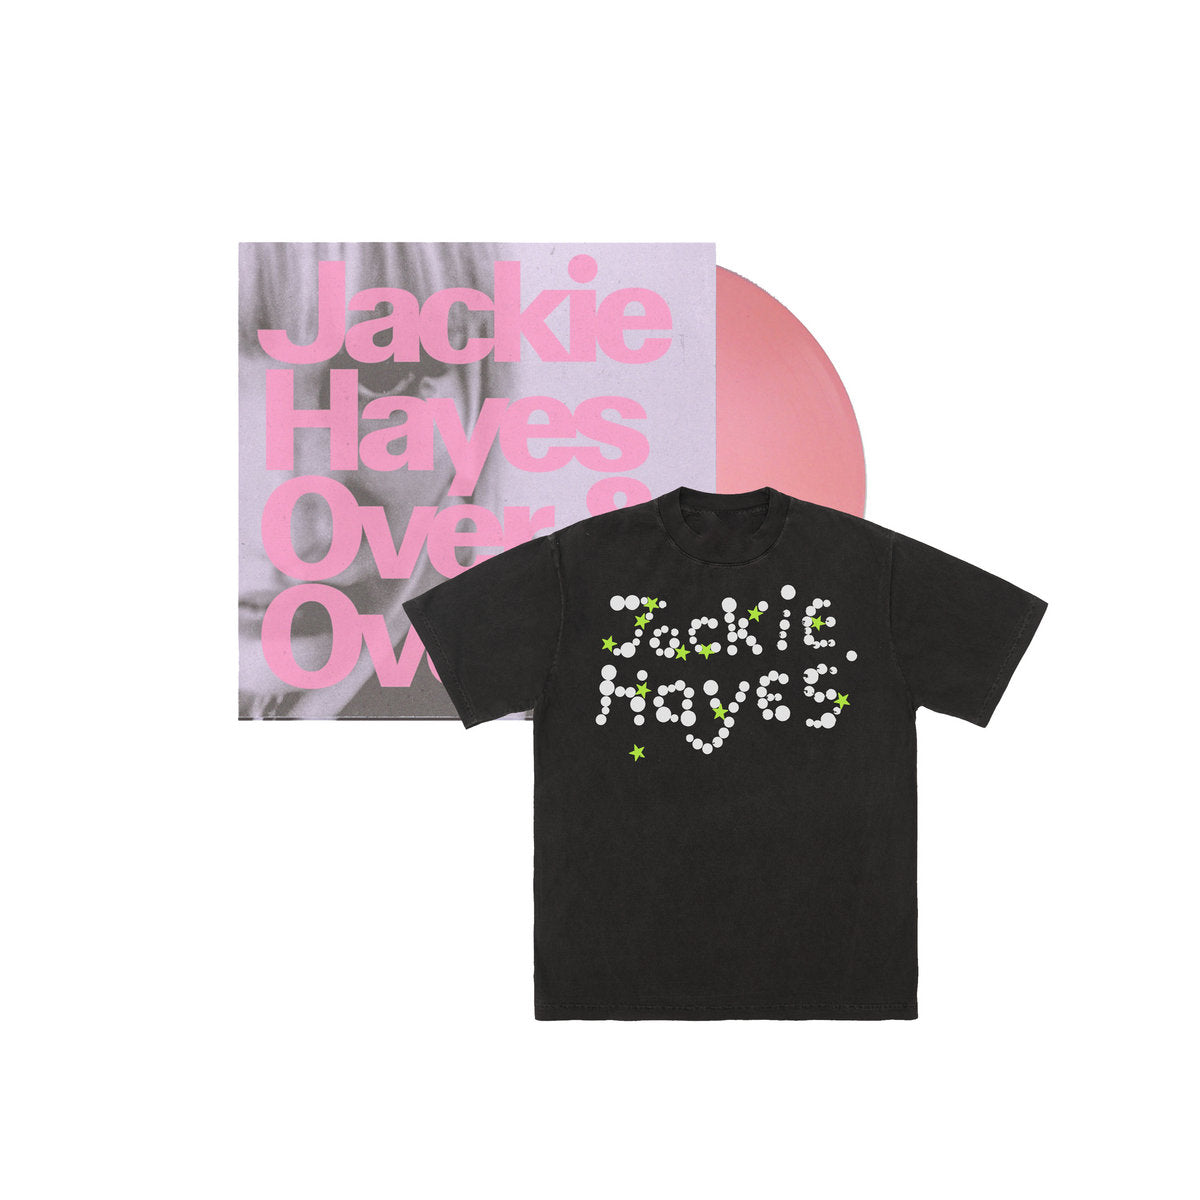 Jackie Hayes - Over & Over - Vinyl LP x T-Shirt Bundle